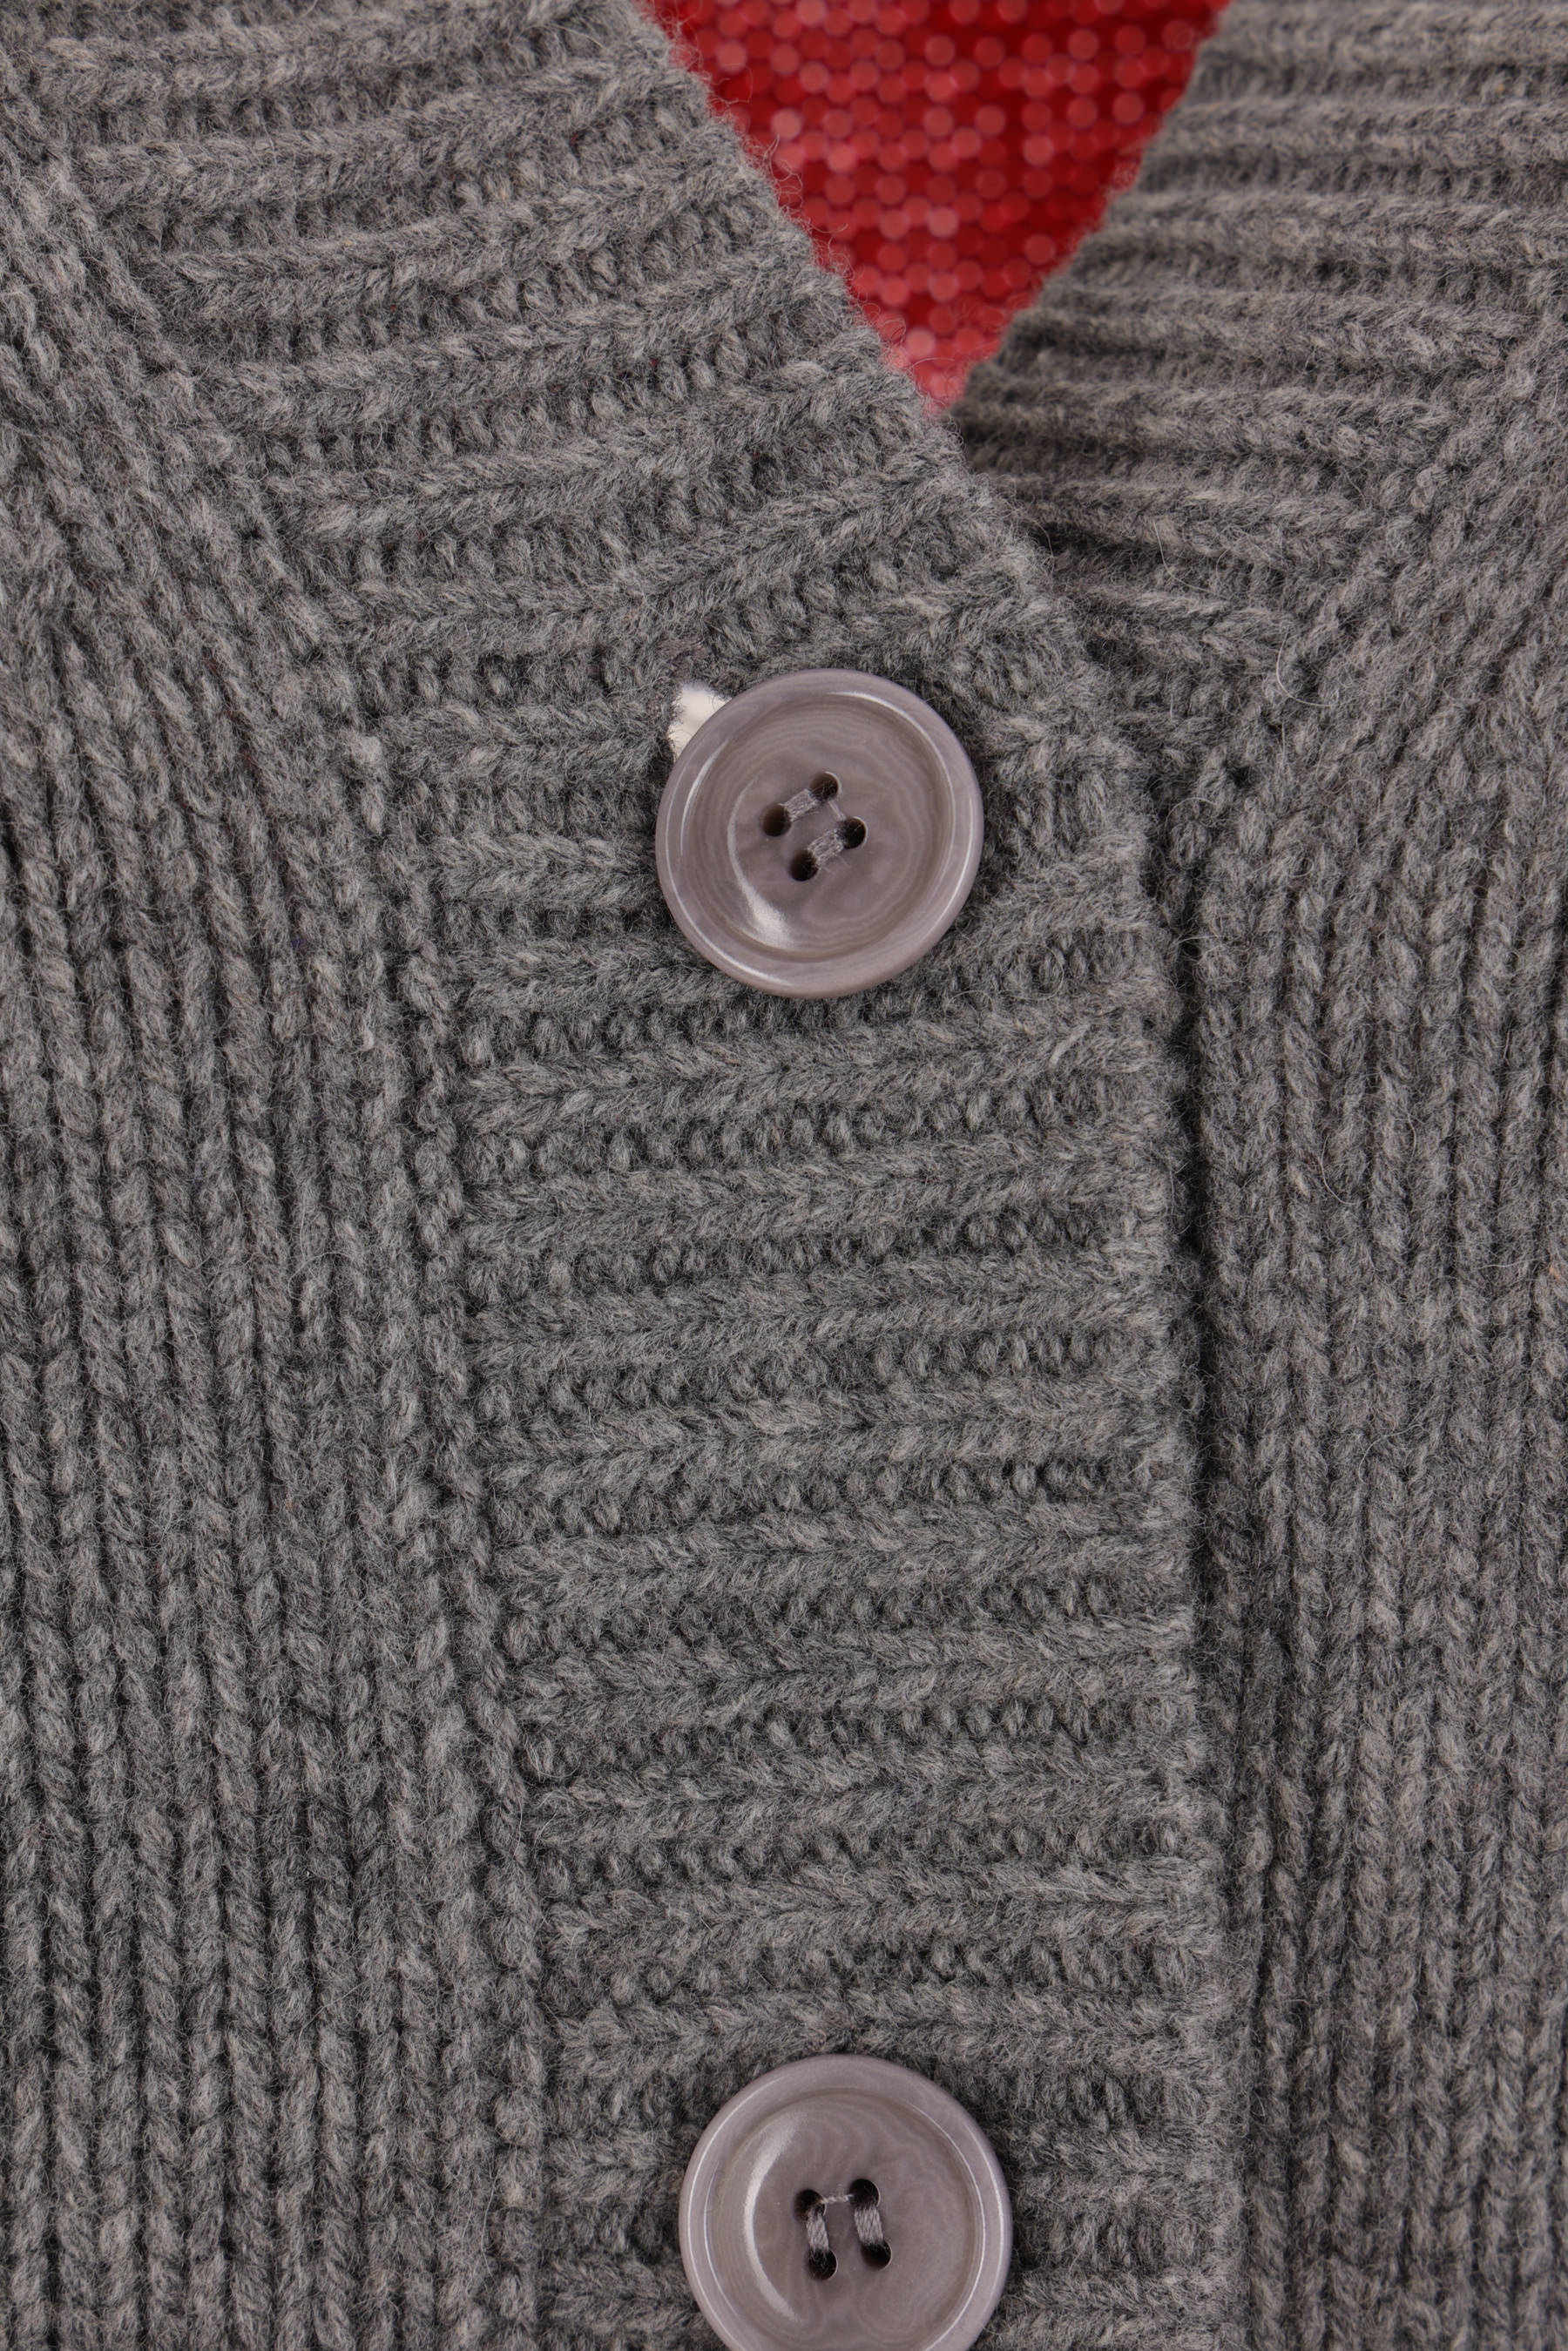 Kenzo Target wool blend cardigan – 10corsocomo